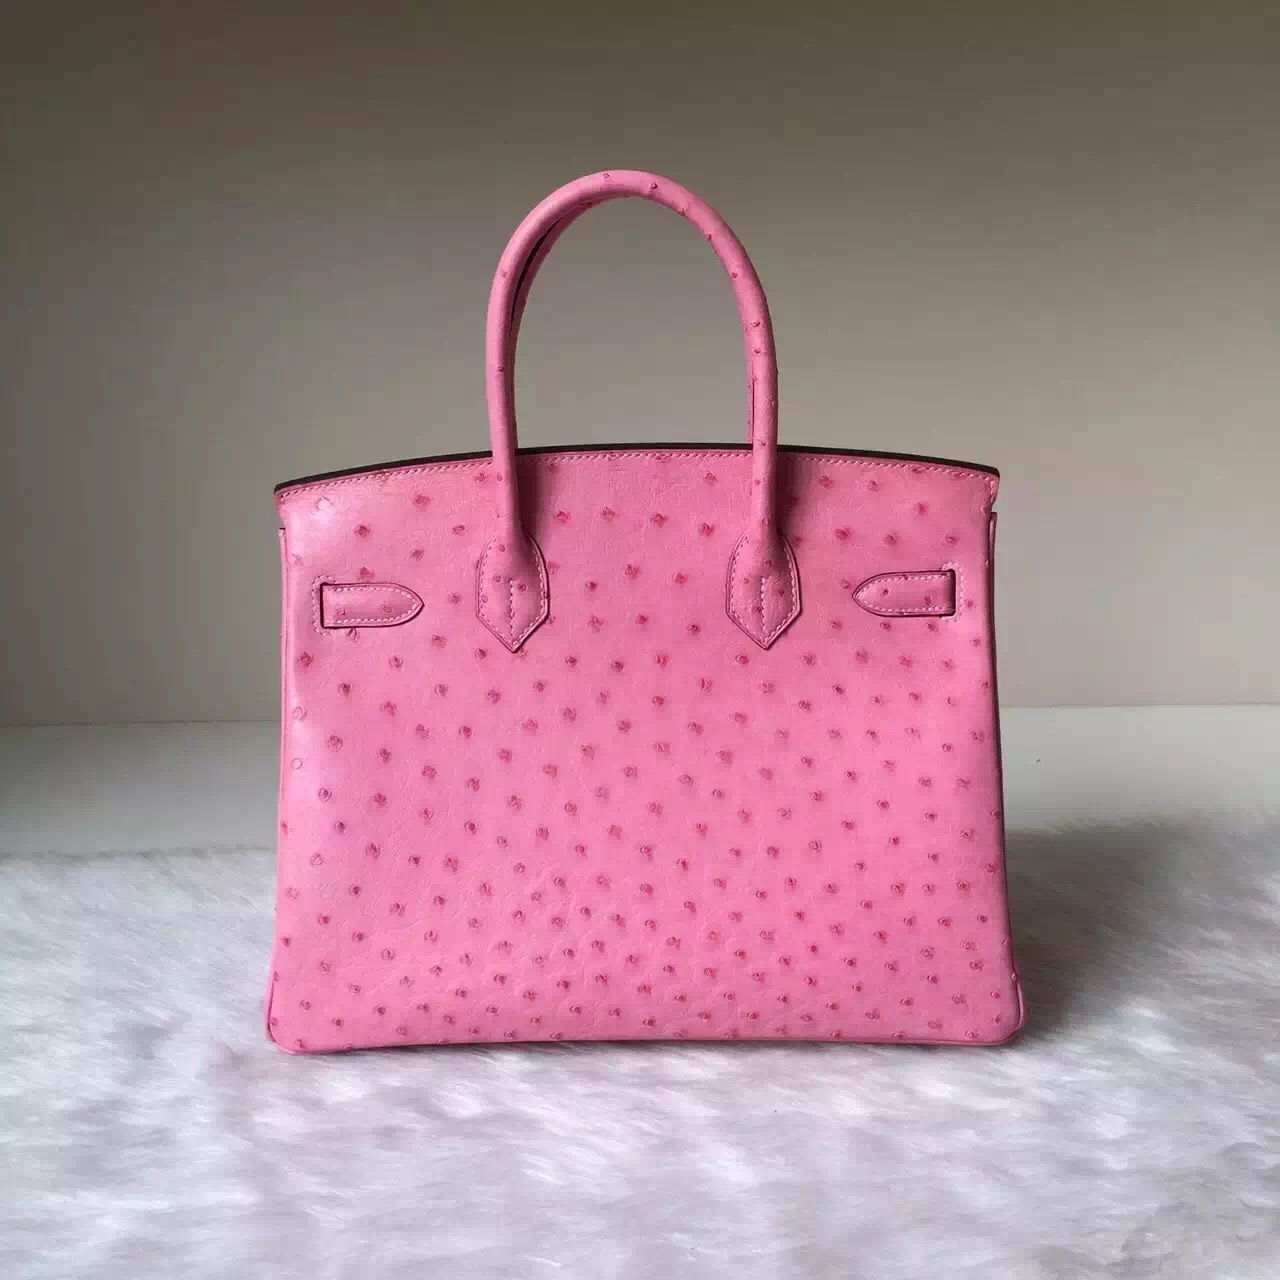 Online Store Hermes Ostrich Leather Birkin Bag 30cm in Peach Pink